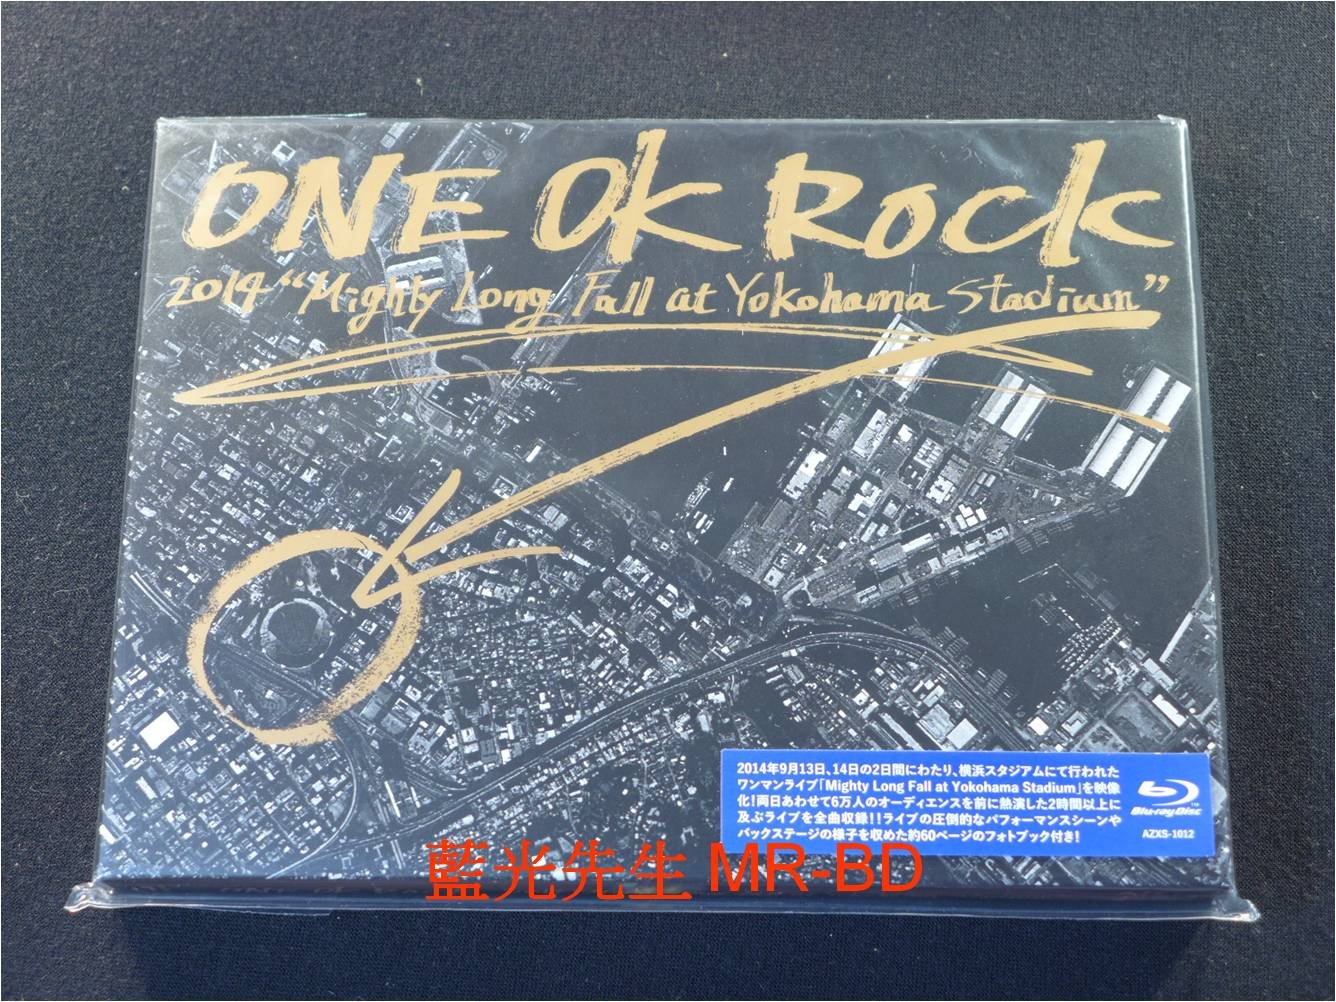 藍光BD] - ONE OK ROCK 2014 橫濱演唱Mighty Long Fall at Yokohama